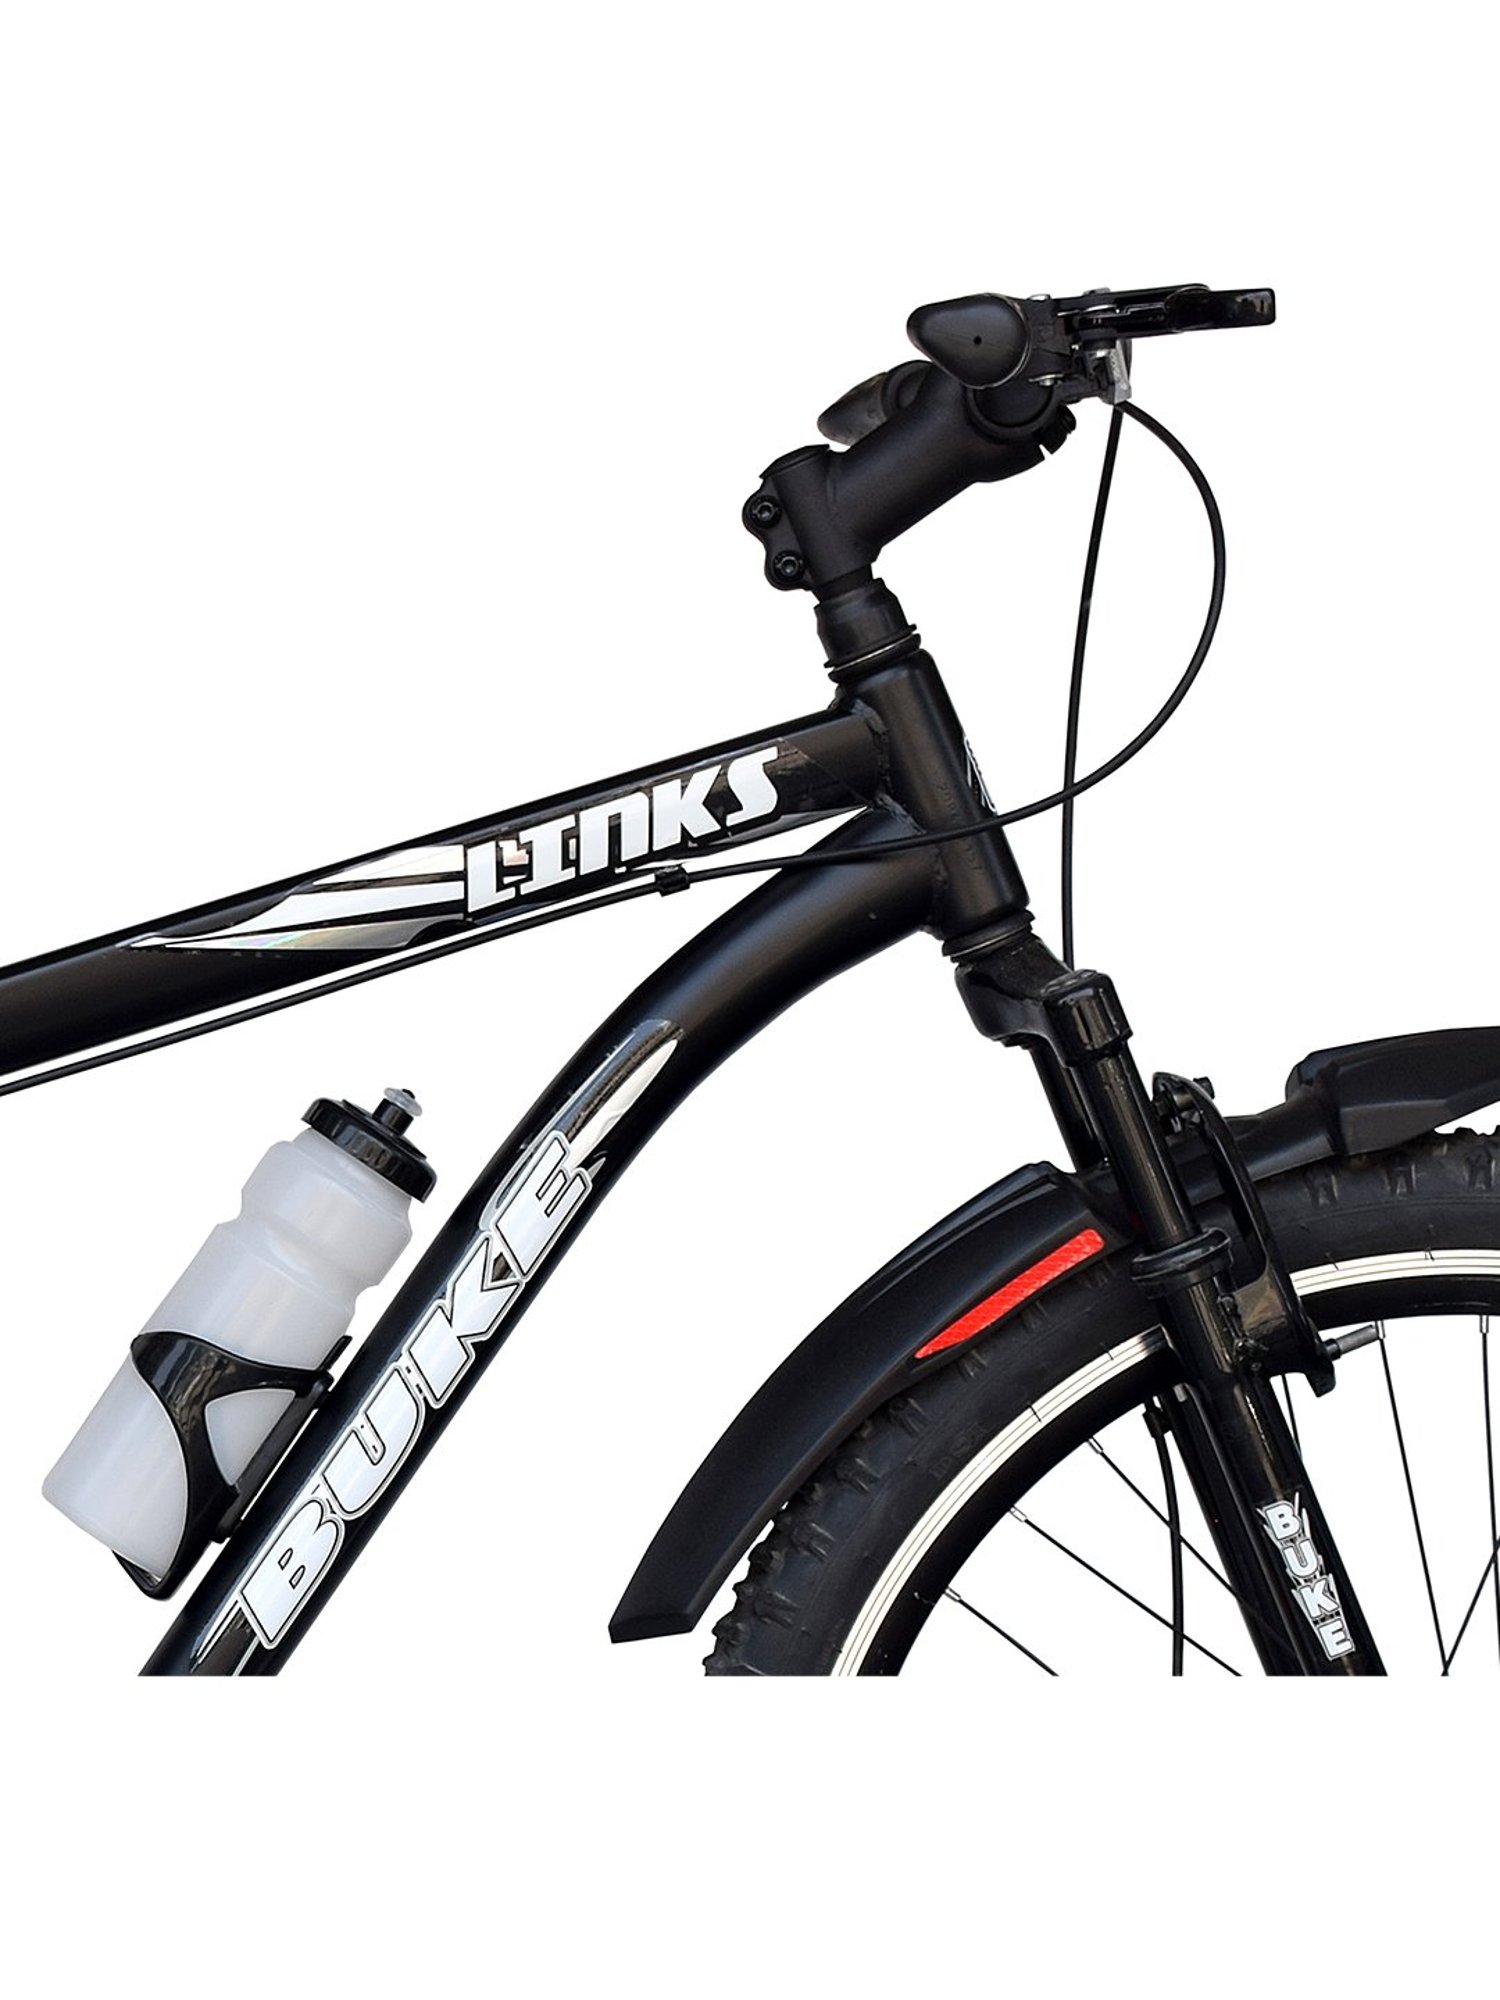 Avon Matt Black Buke Links 26T GamerApex IBC MTB Mountain Bike